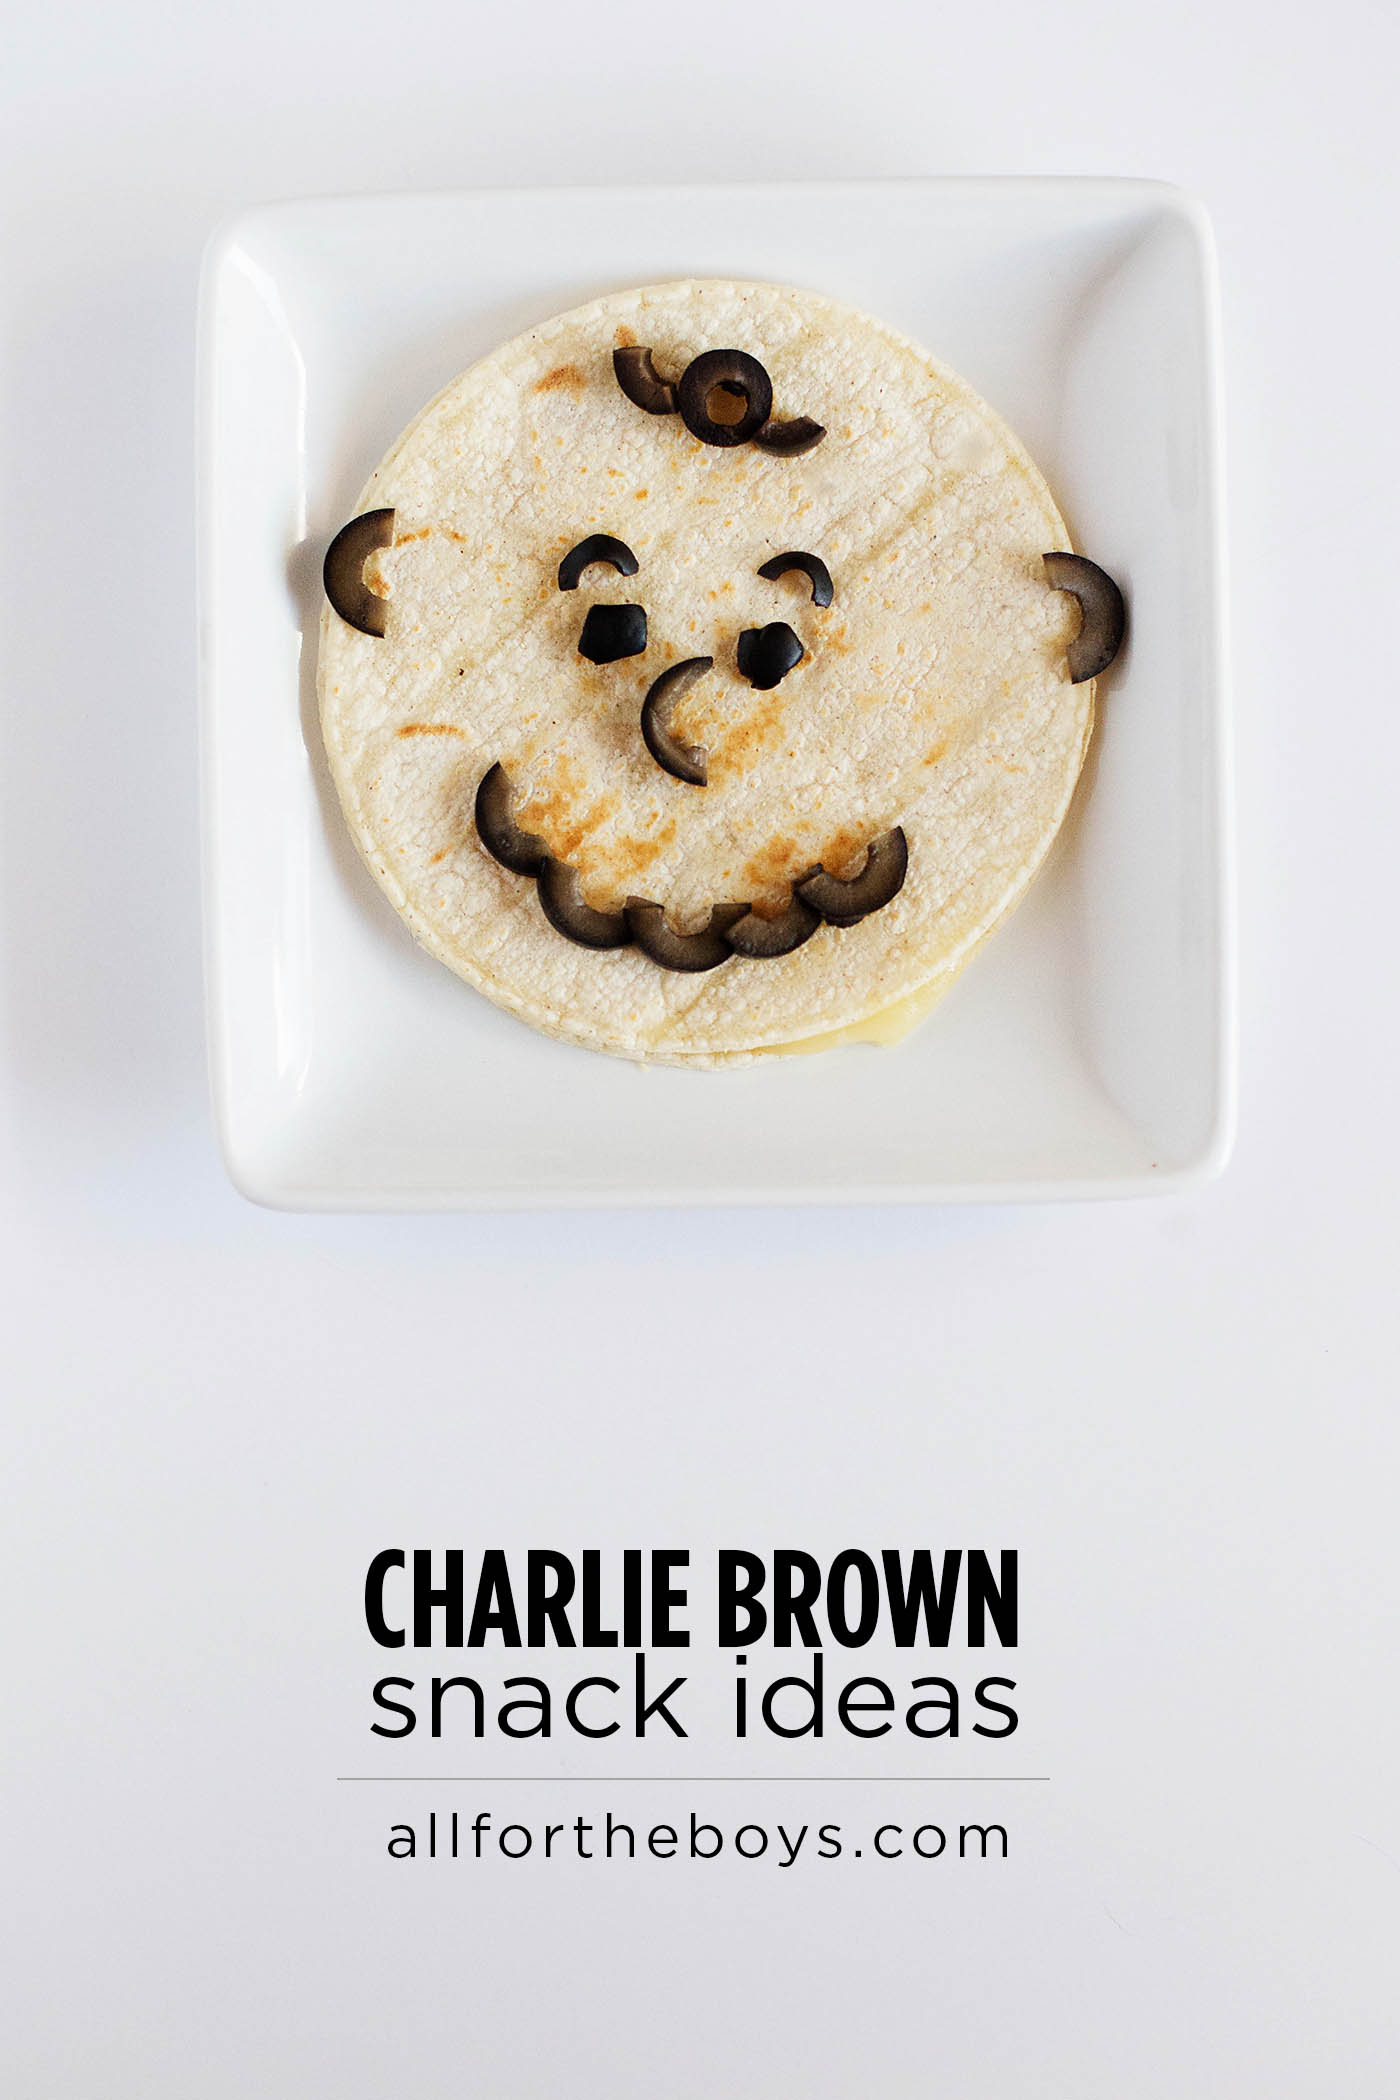 Charlie Brown Quesadilla & pizza snacks from allfortheboys.com